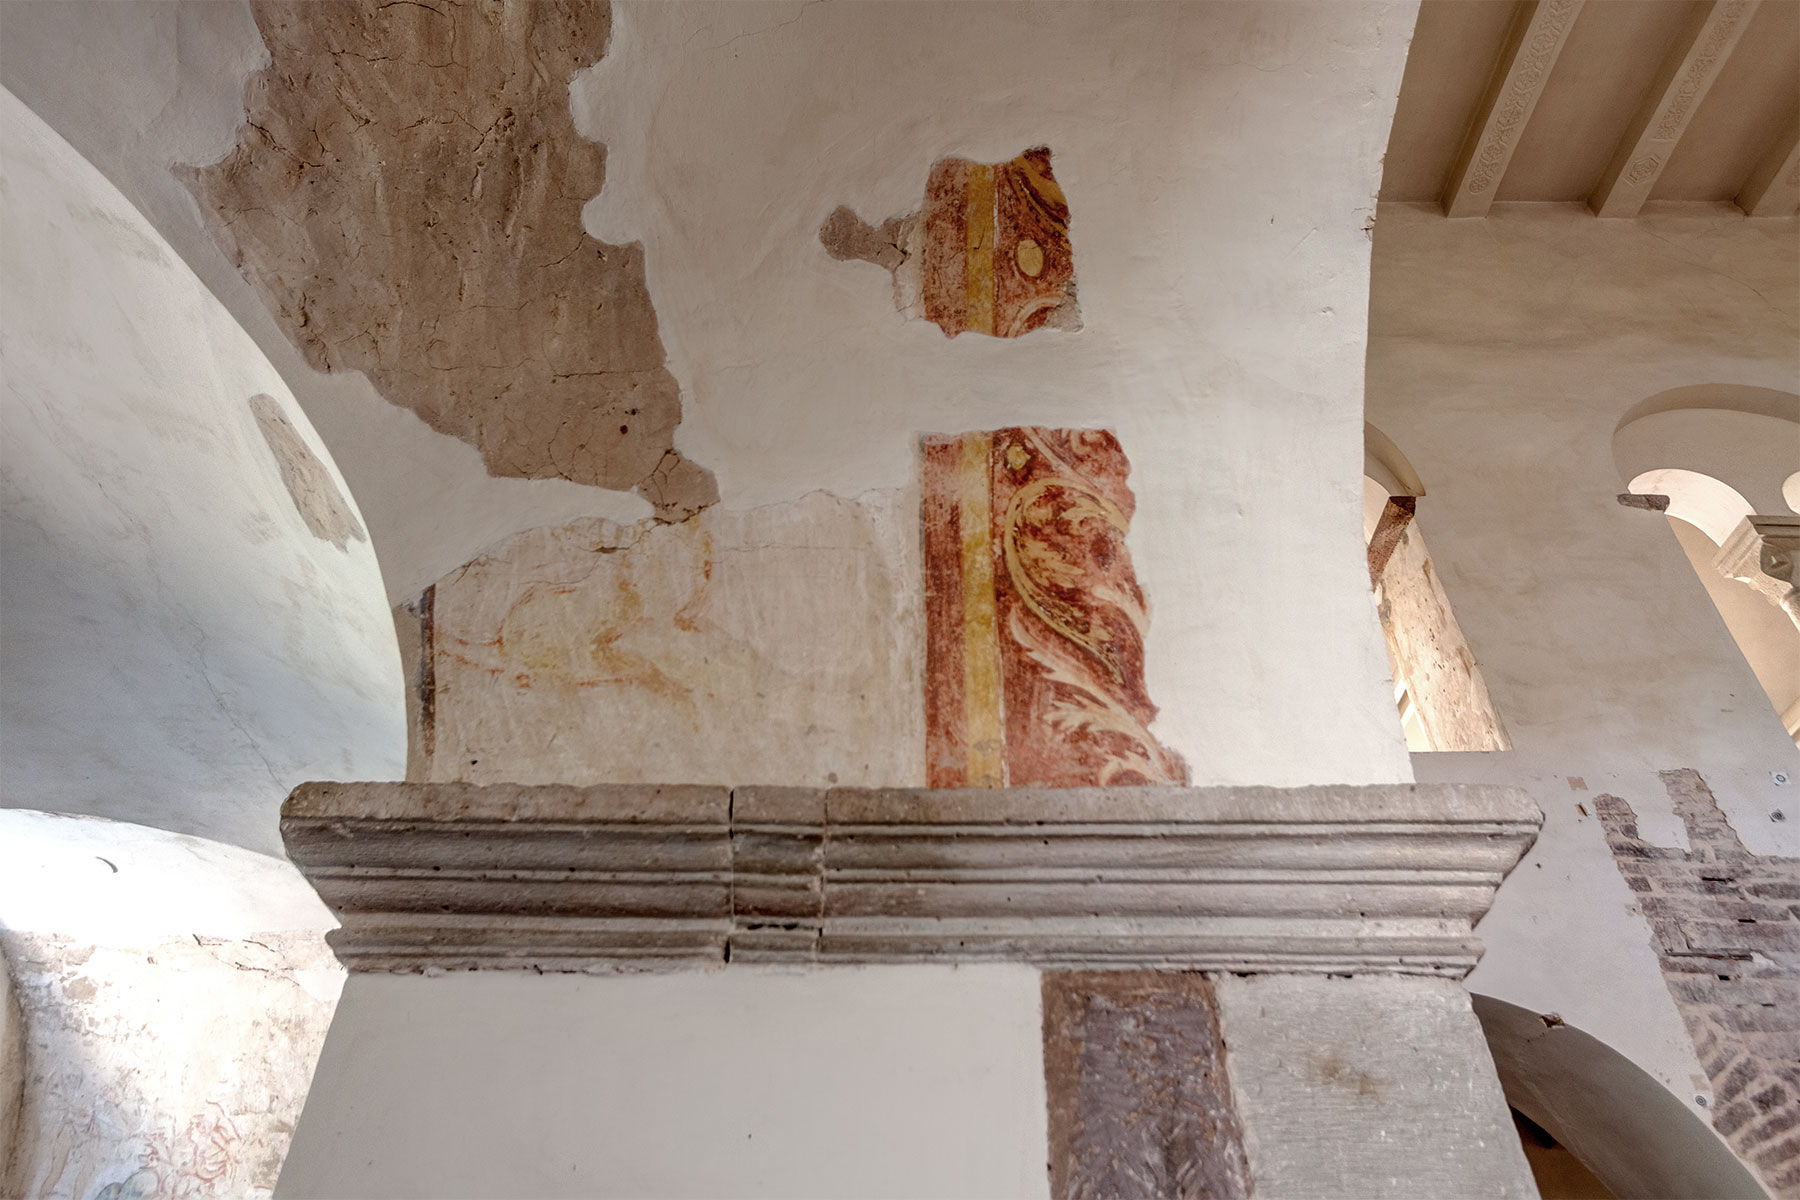 Wandmalerei im Obergeschoss des karolingischen Westwerks von Kloster Corvey, dem UNESCO-Welterbe bei Höxter an der Weser.